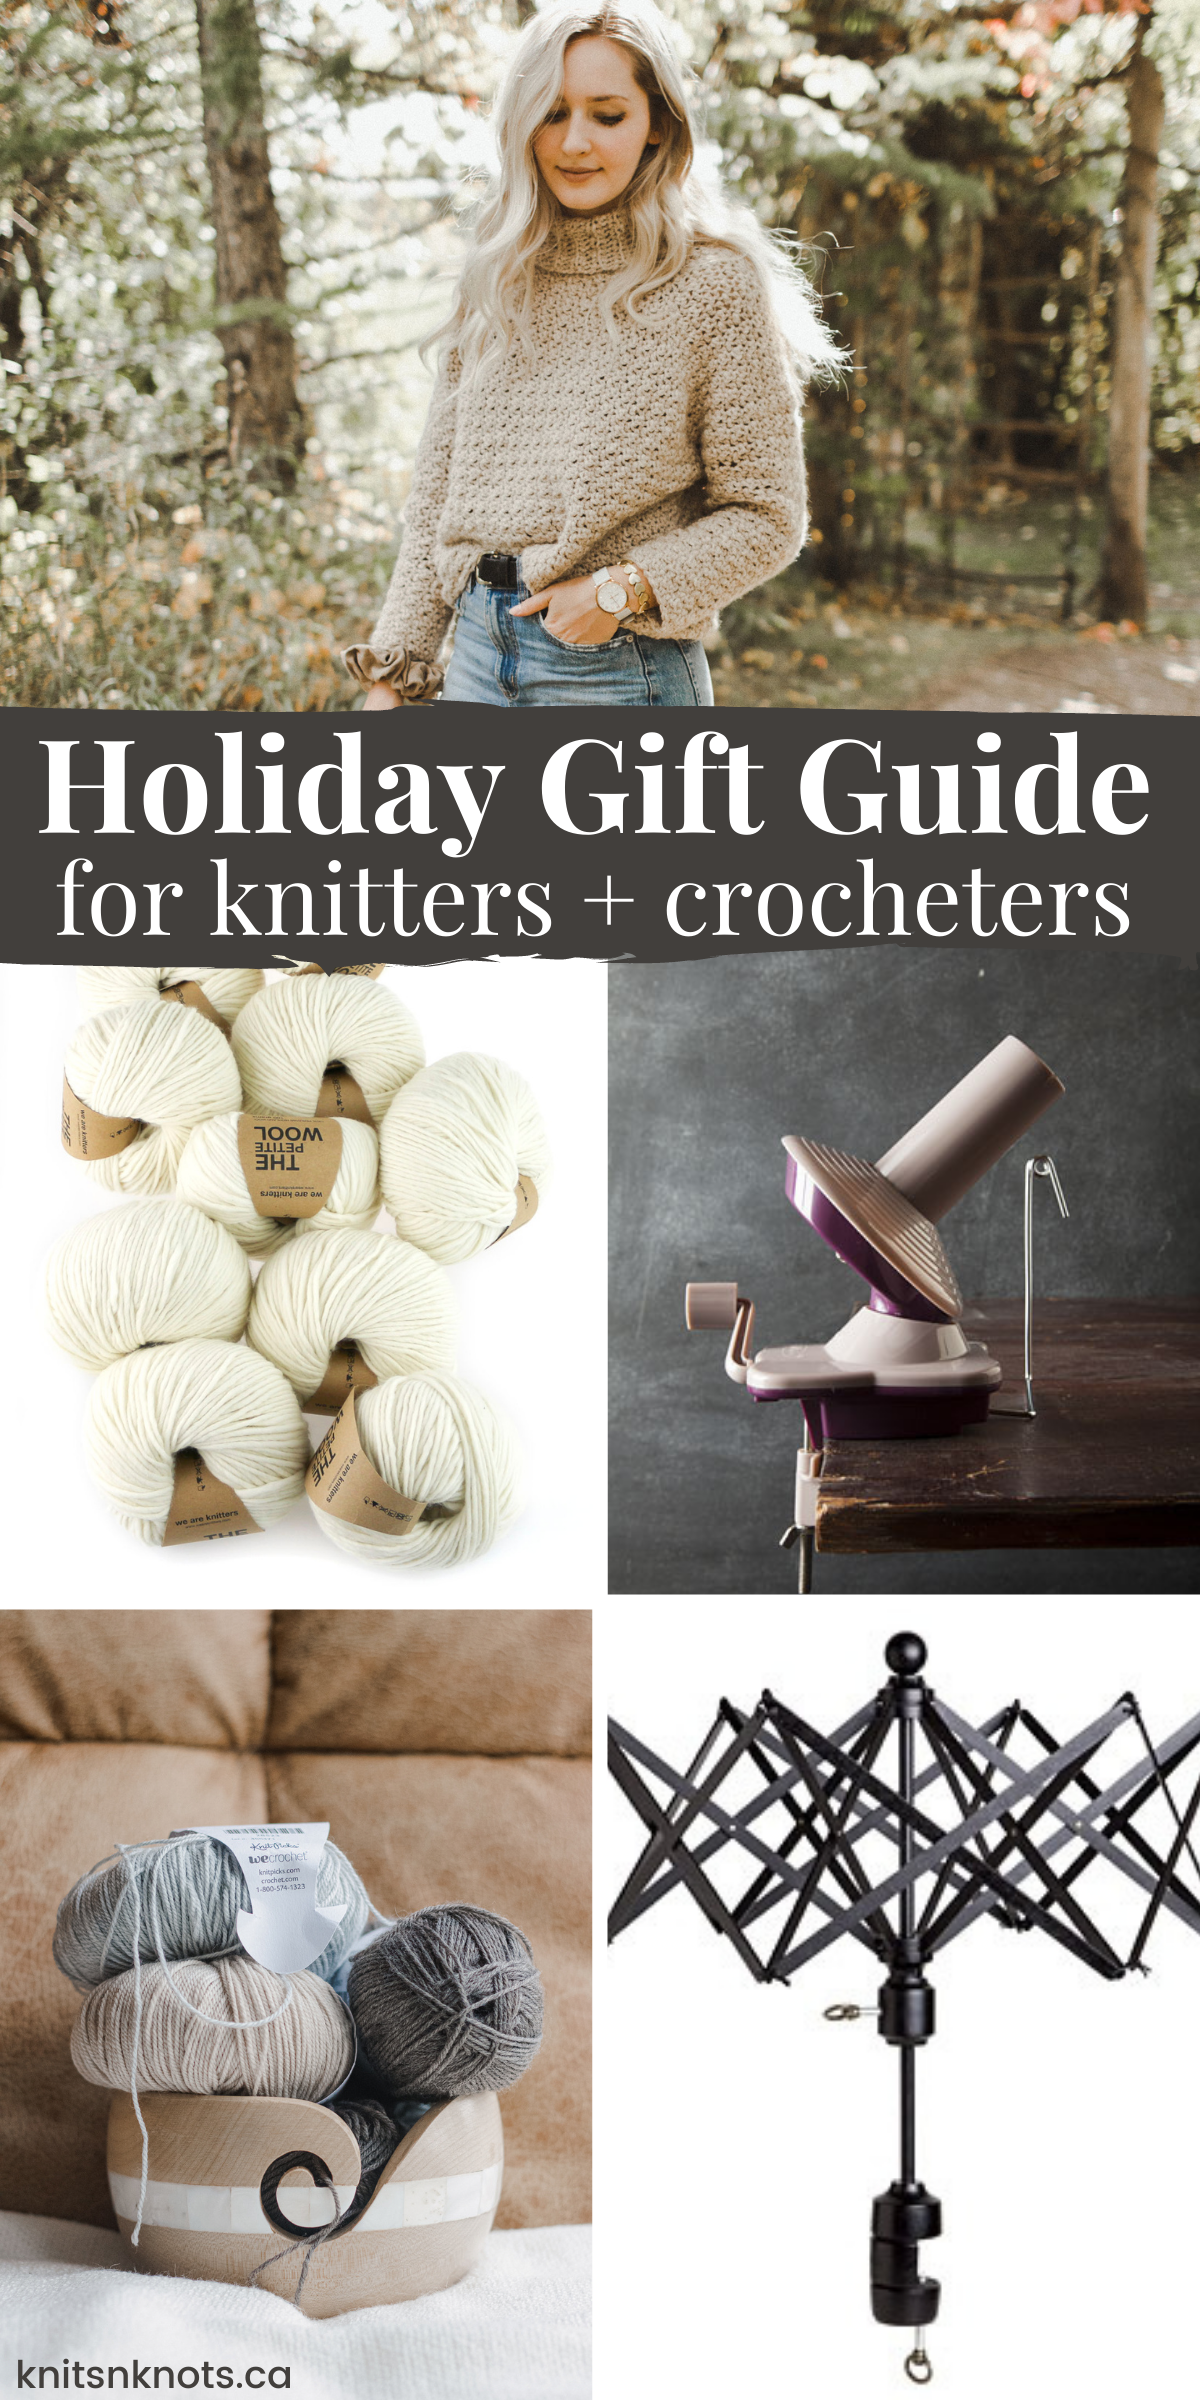 Knit Picks (@knit_picks) • Instagram photos and videos